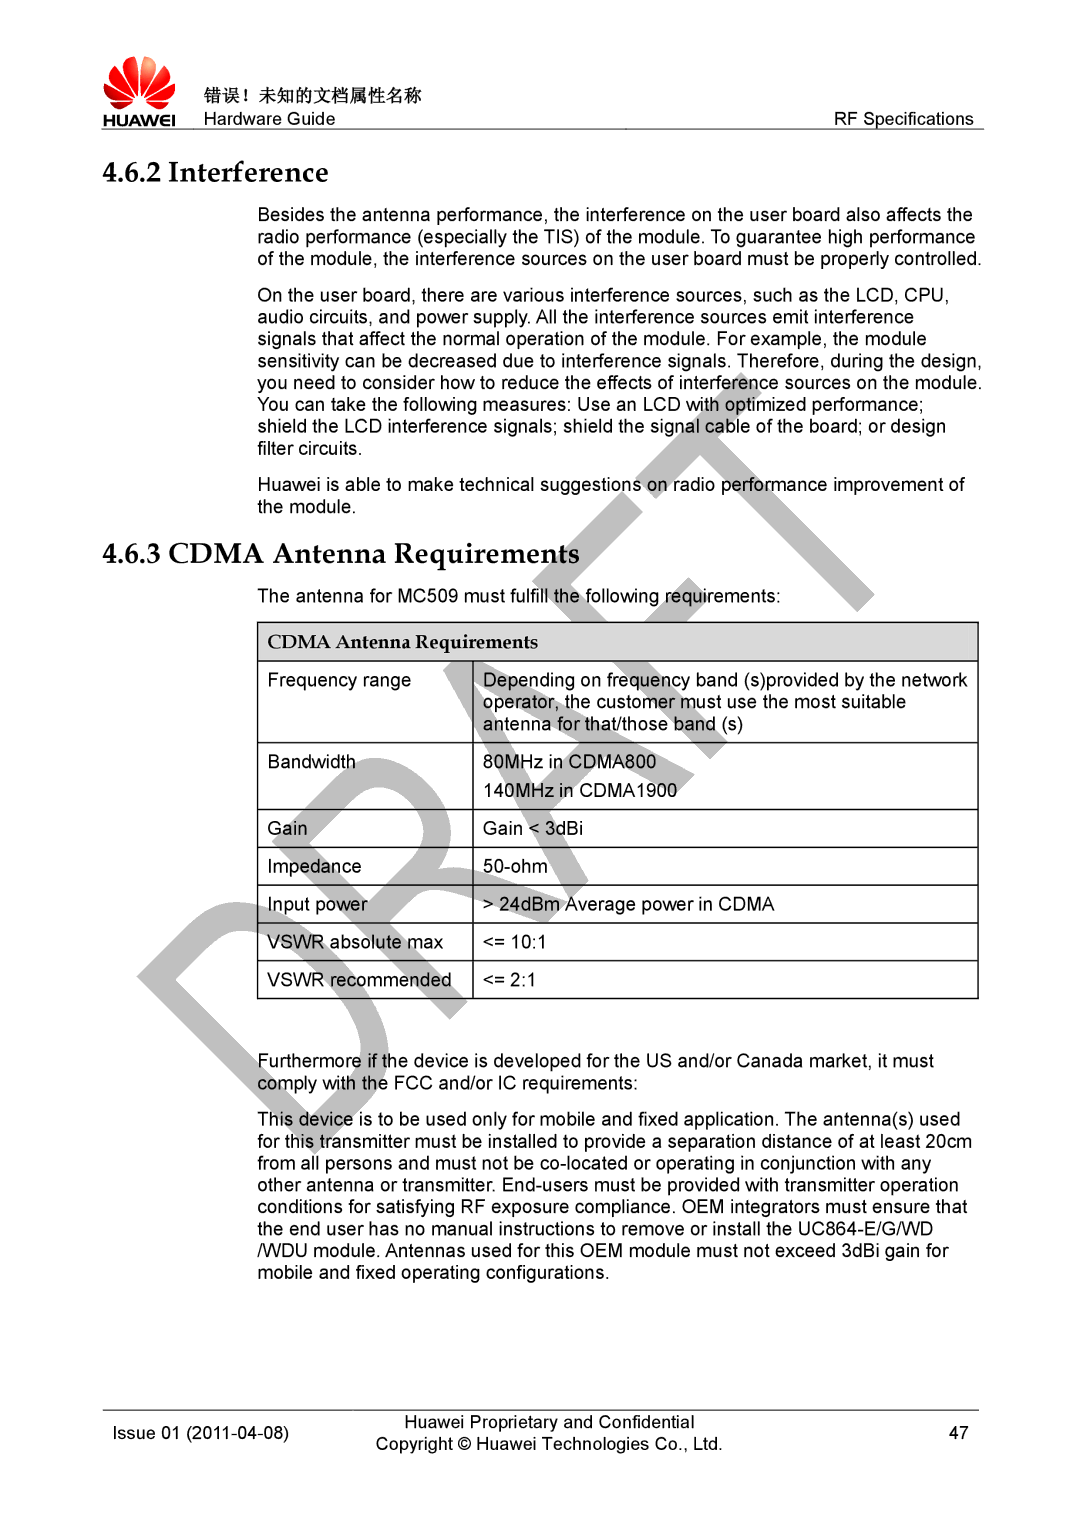 Huawei MC509 CDMA LGA Interference, Cdma Antenna Requirements, Antenna for MC509 must fulfill the following requirements 